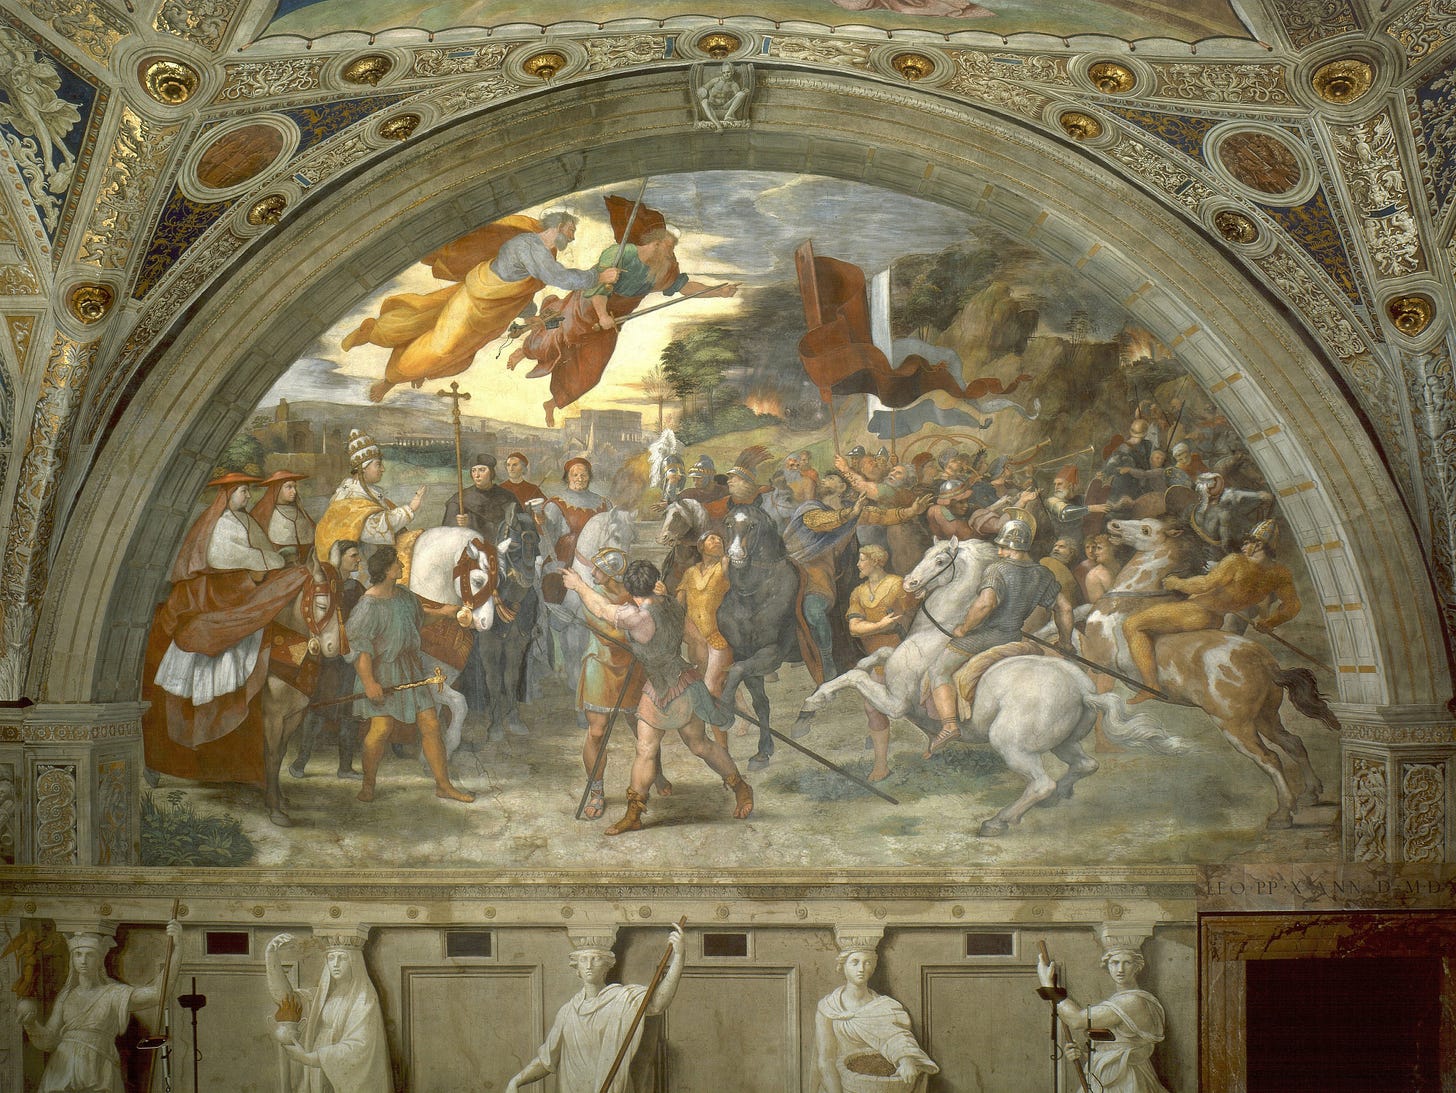 Raphael's fresco of St. Leo meeting Attila the Hun.